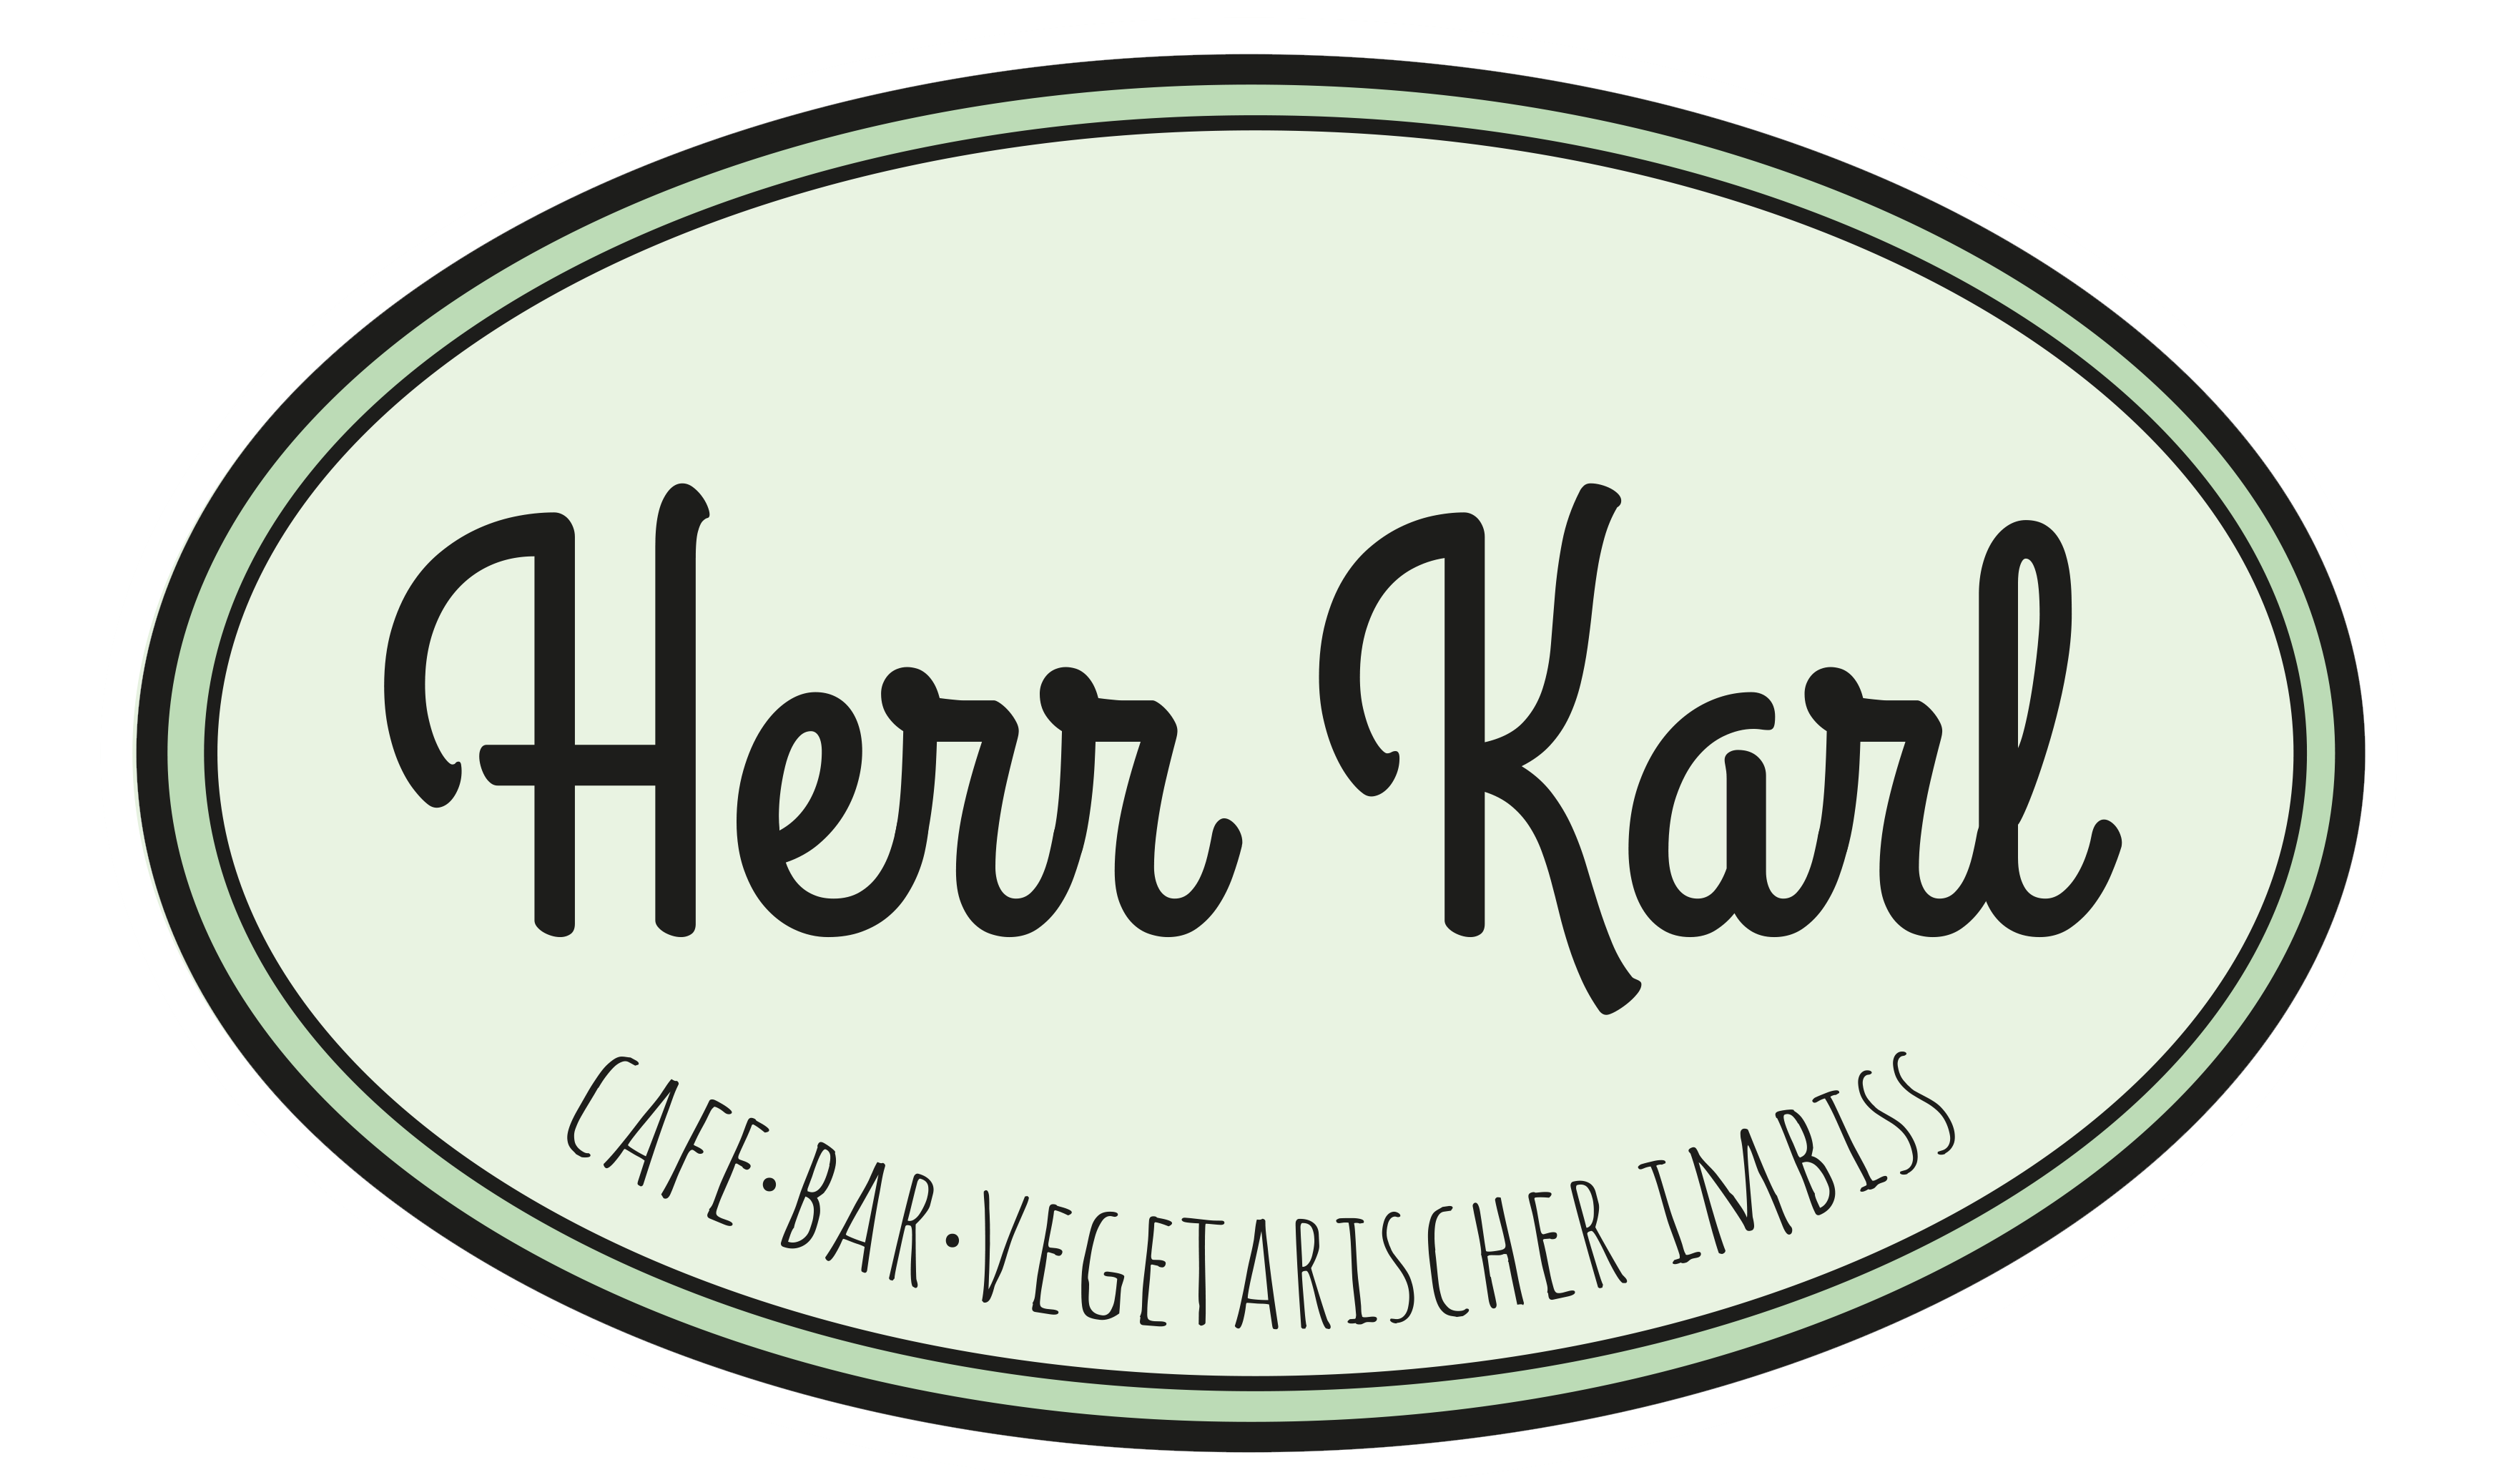 Cafe Herr Karl